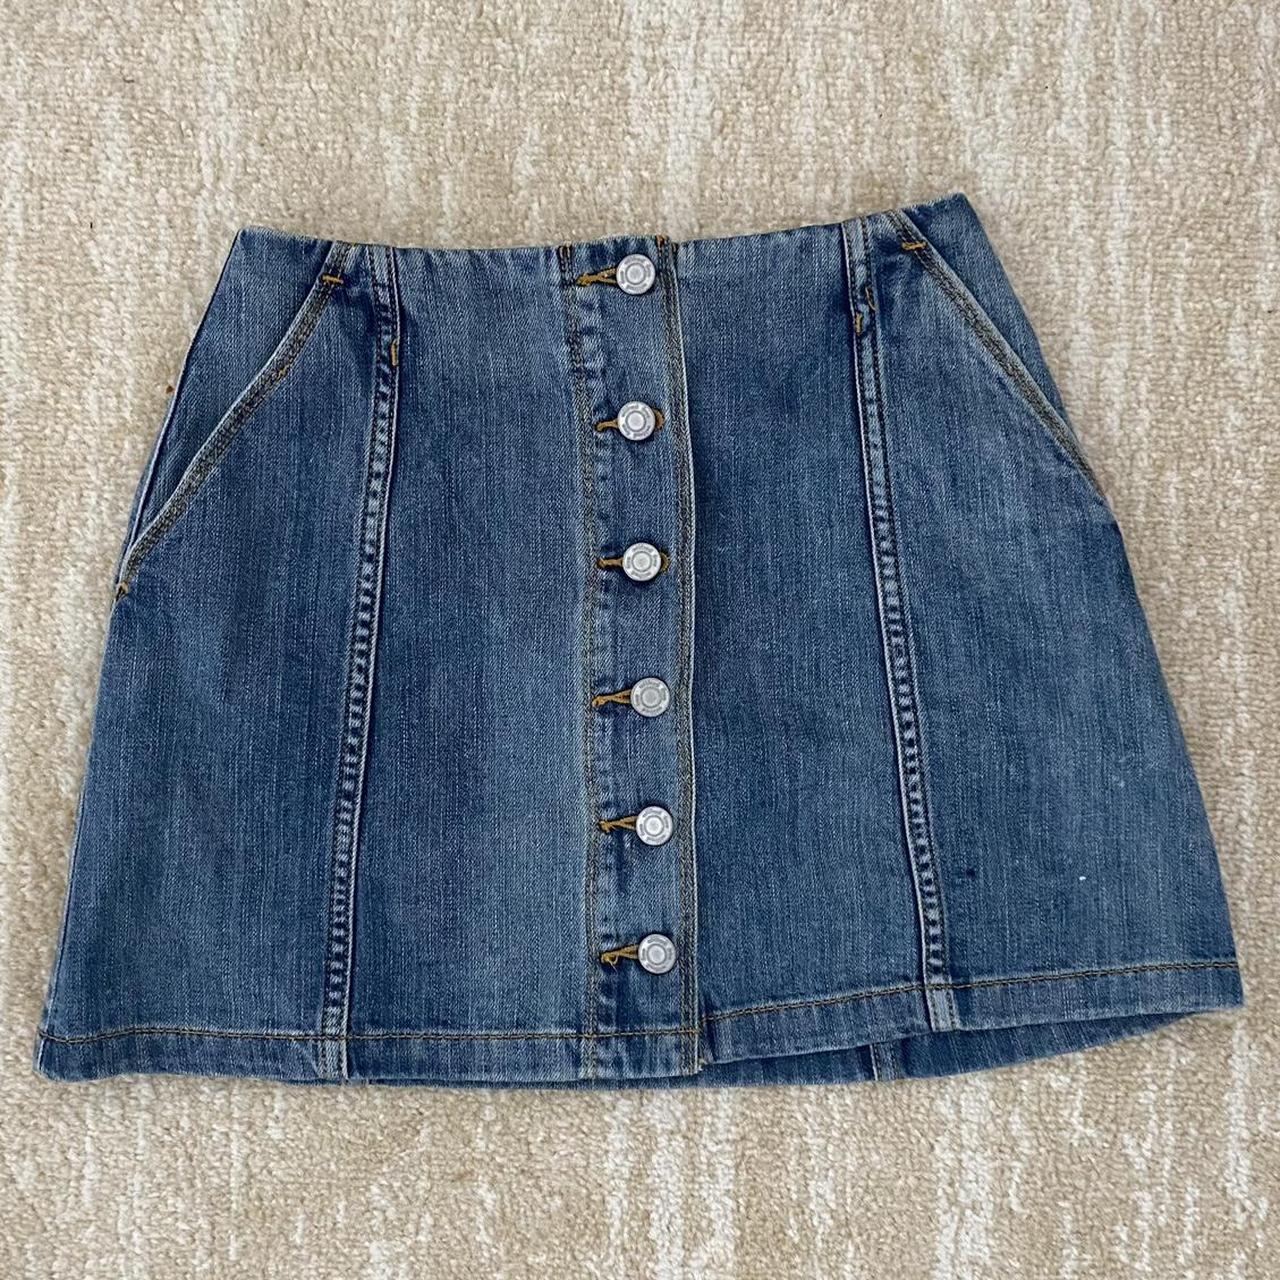 How To Make A Denim Button-Up Skirt